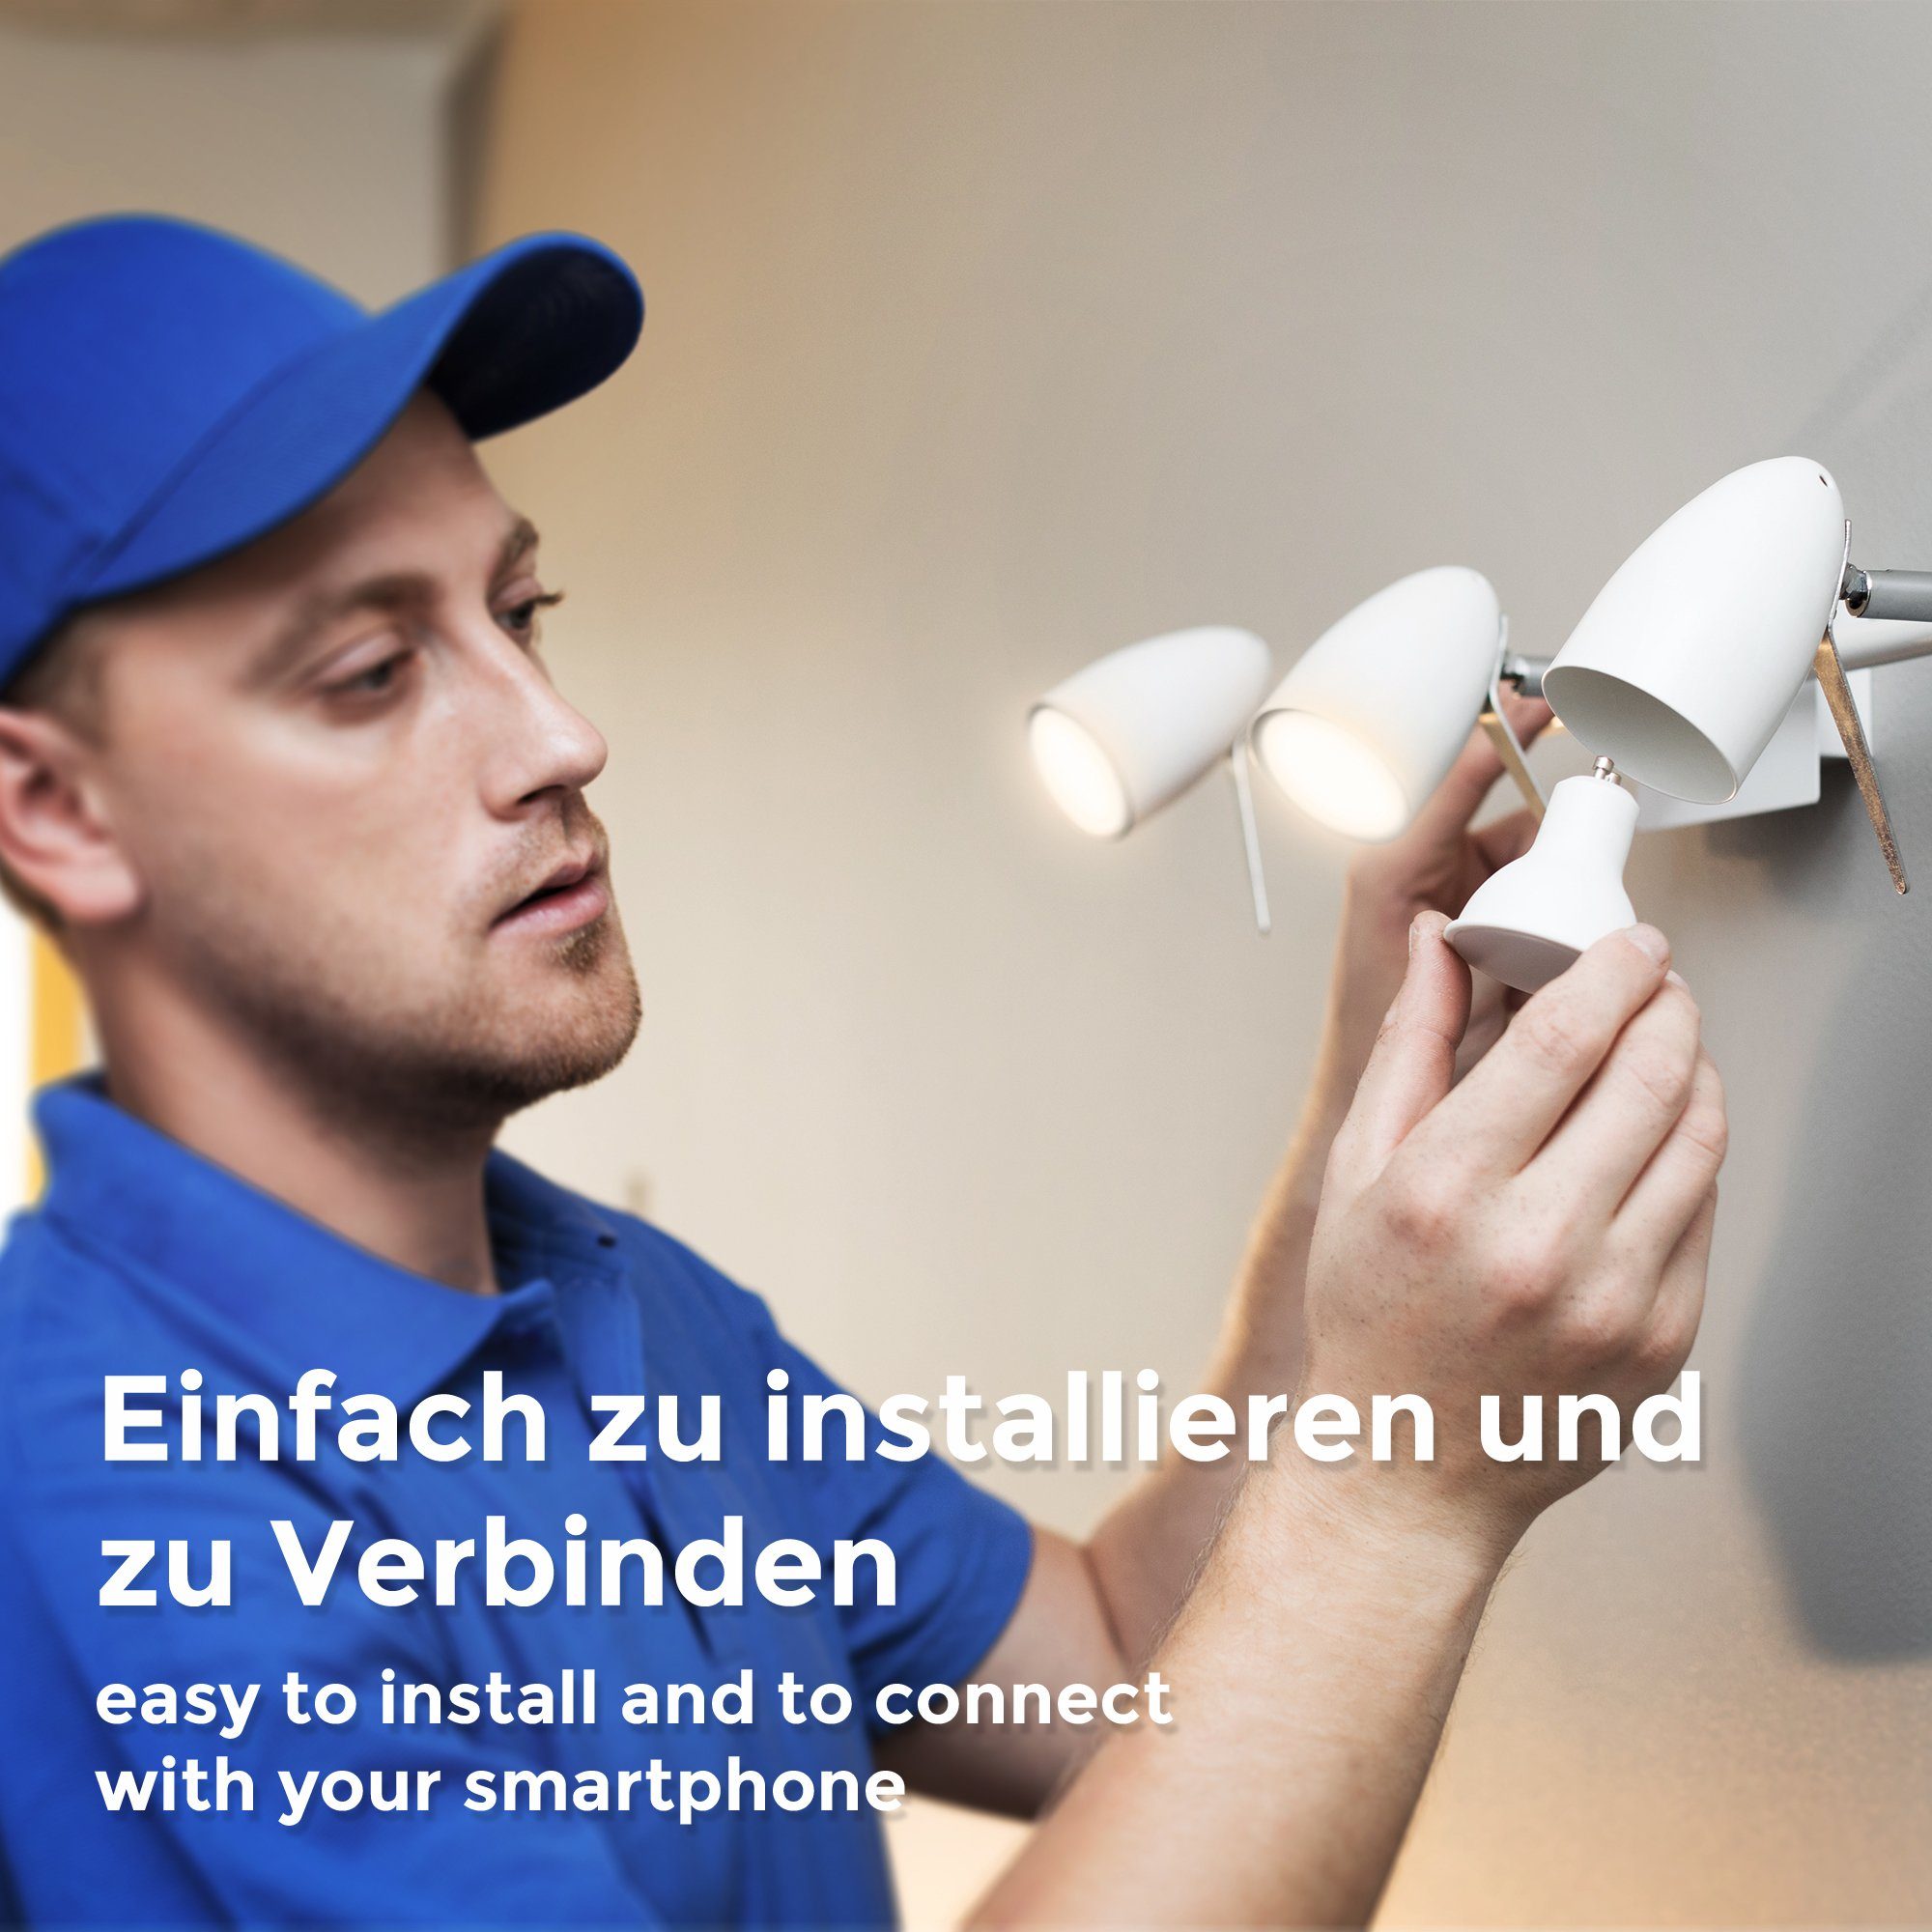 St., GU10, 1 Warmweiß, App-Steuerung, LED-Leuchtmittel, dimmbar WiFi, RGB, B.K.Licht Smart Home LED-Lampe,